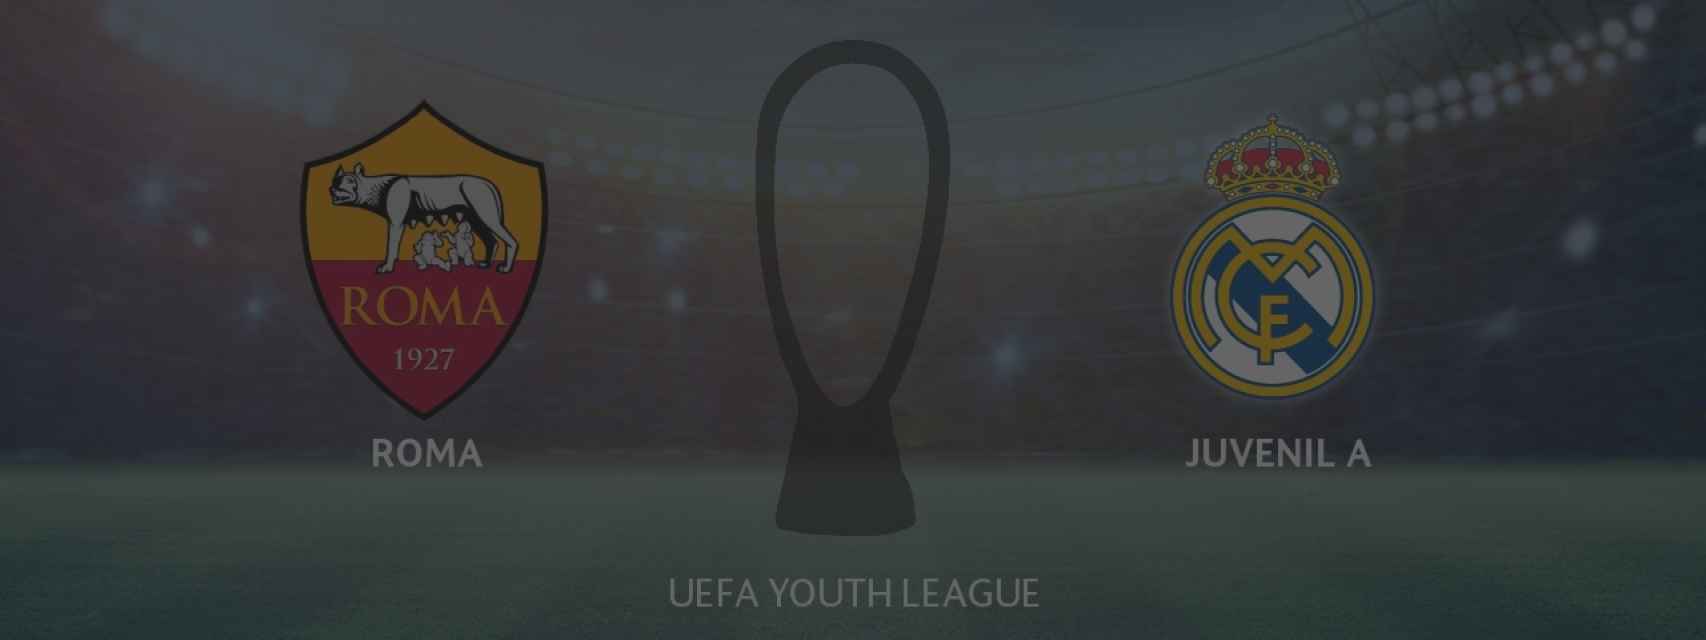 AS Roma - Real Madrid Juvenil A